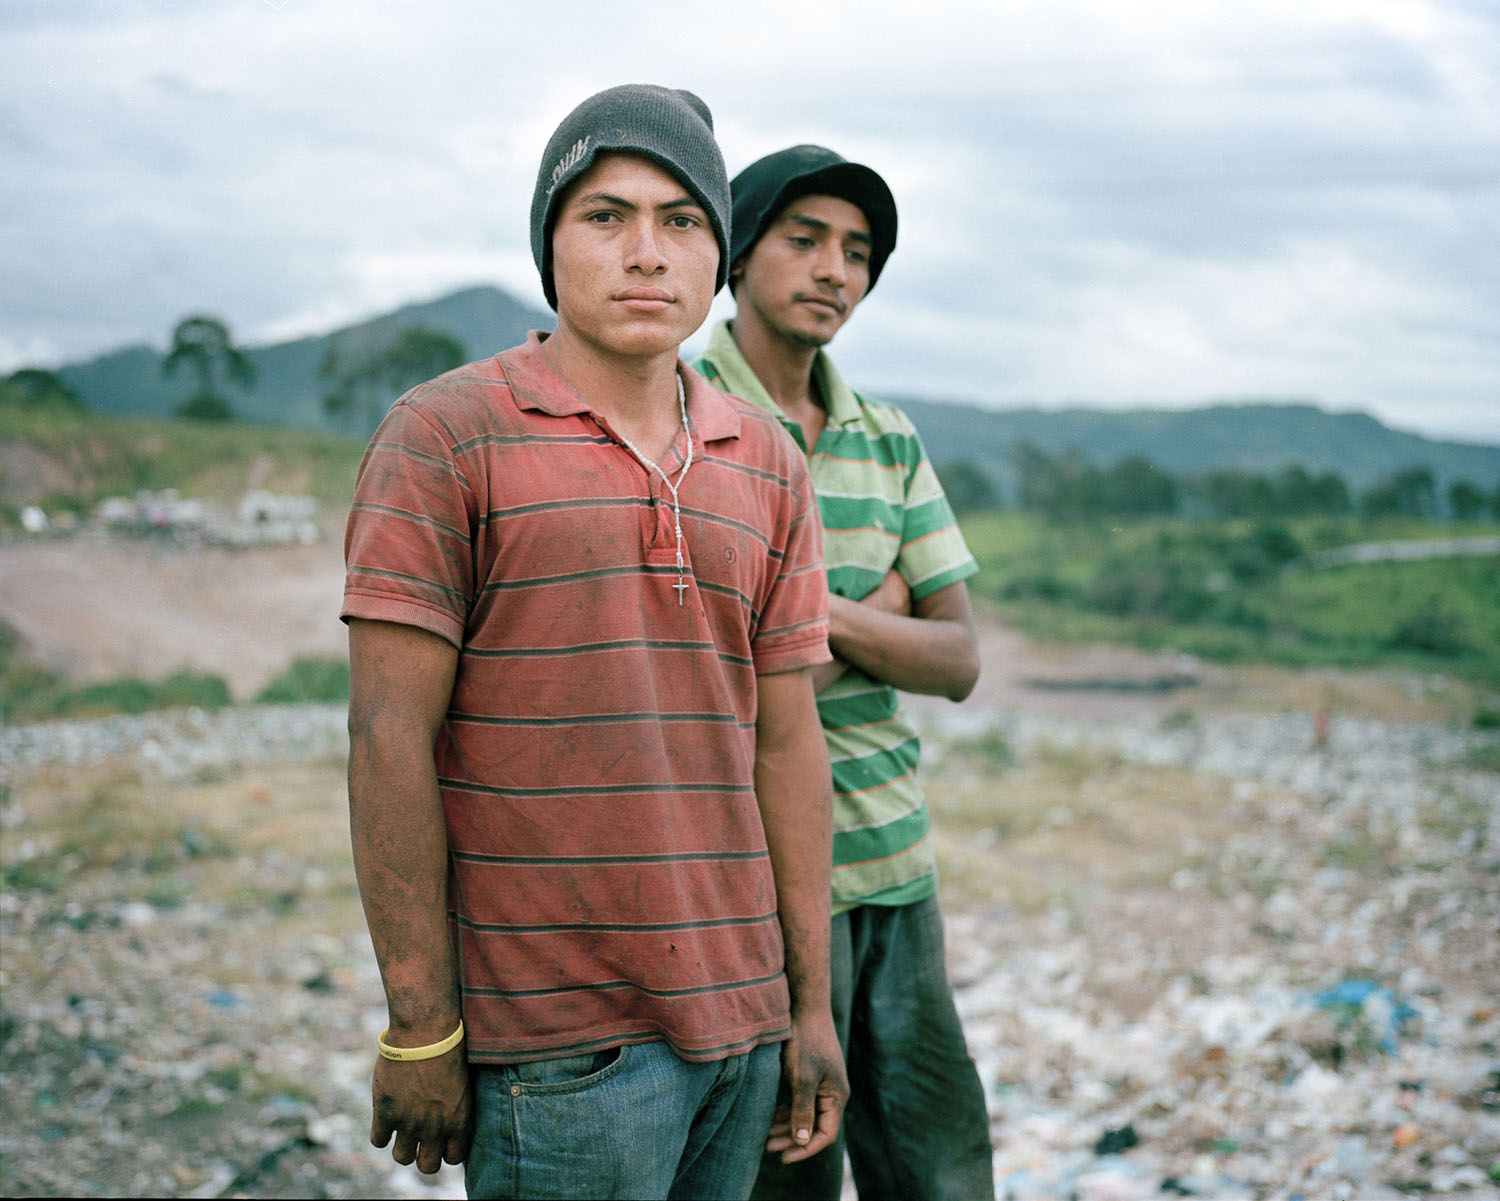 Burn magazine: Aqui VivimosAngel and Gerson in the municipal dump where they work in Tegucigalpa, Honduras.